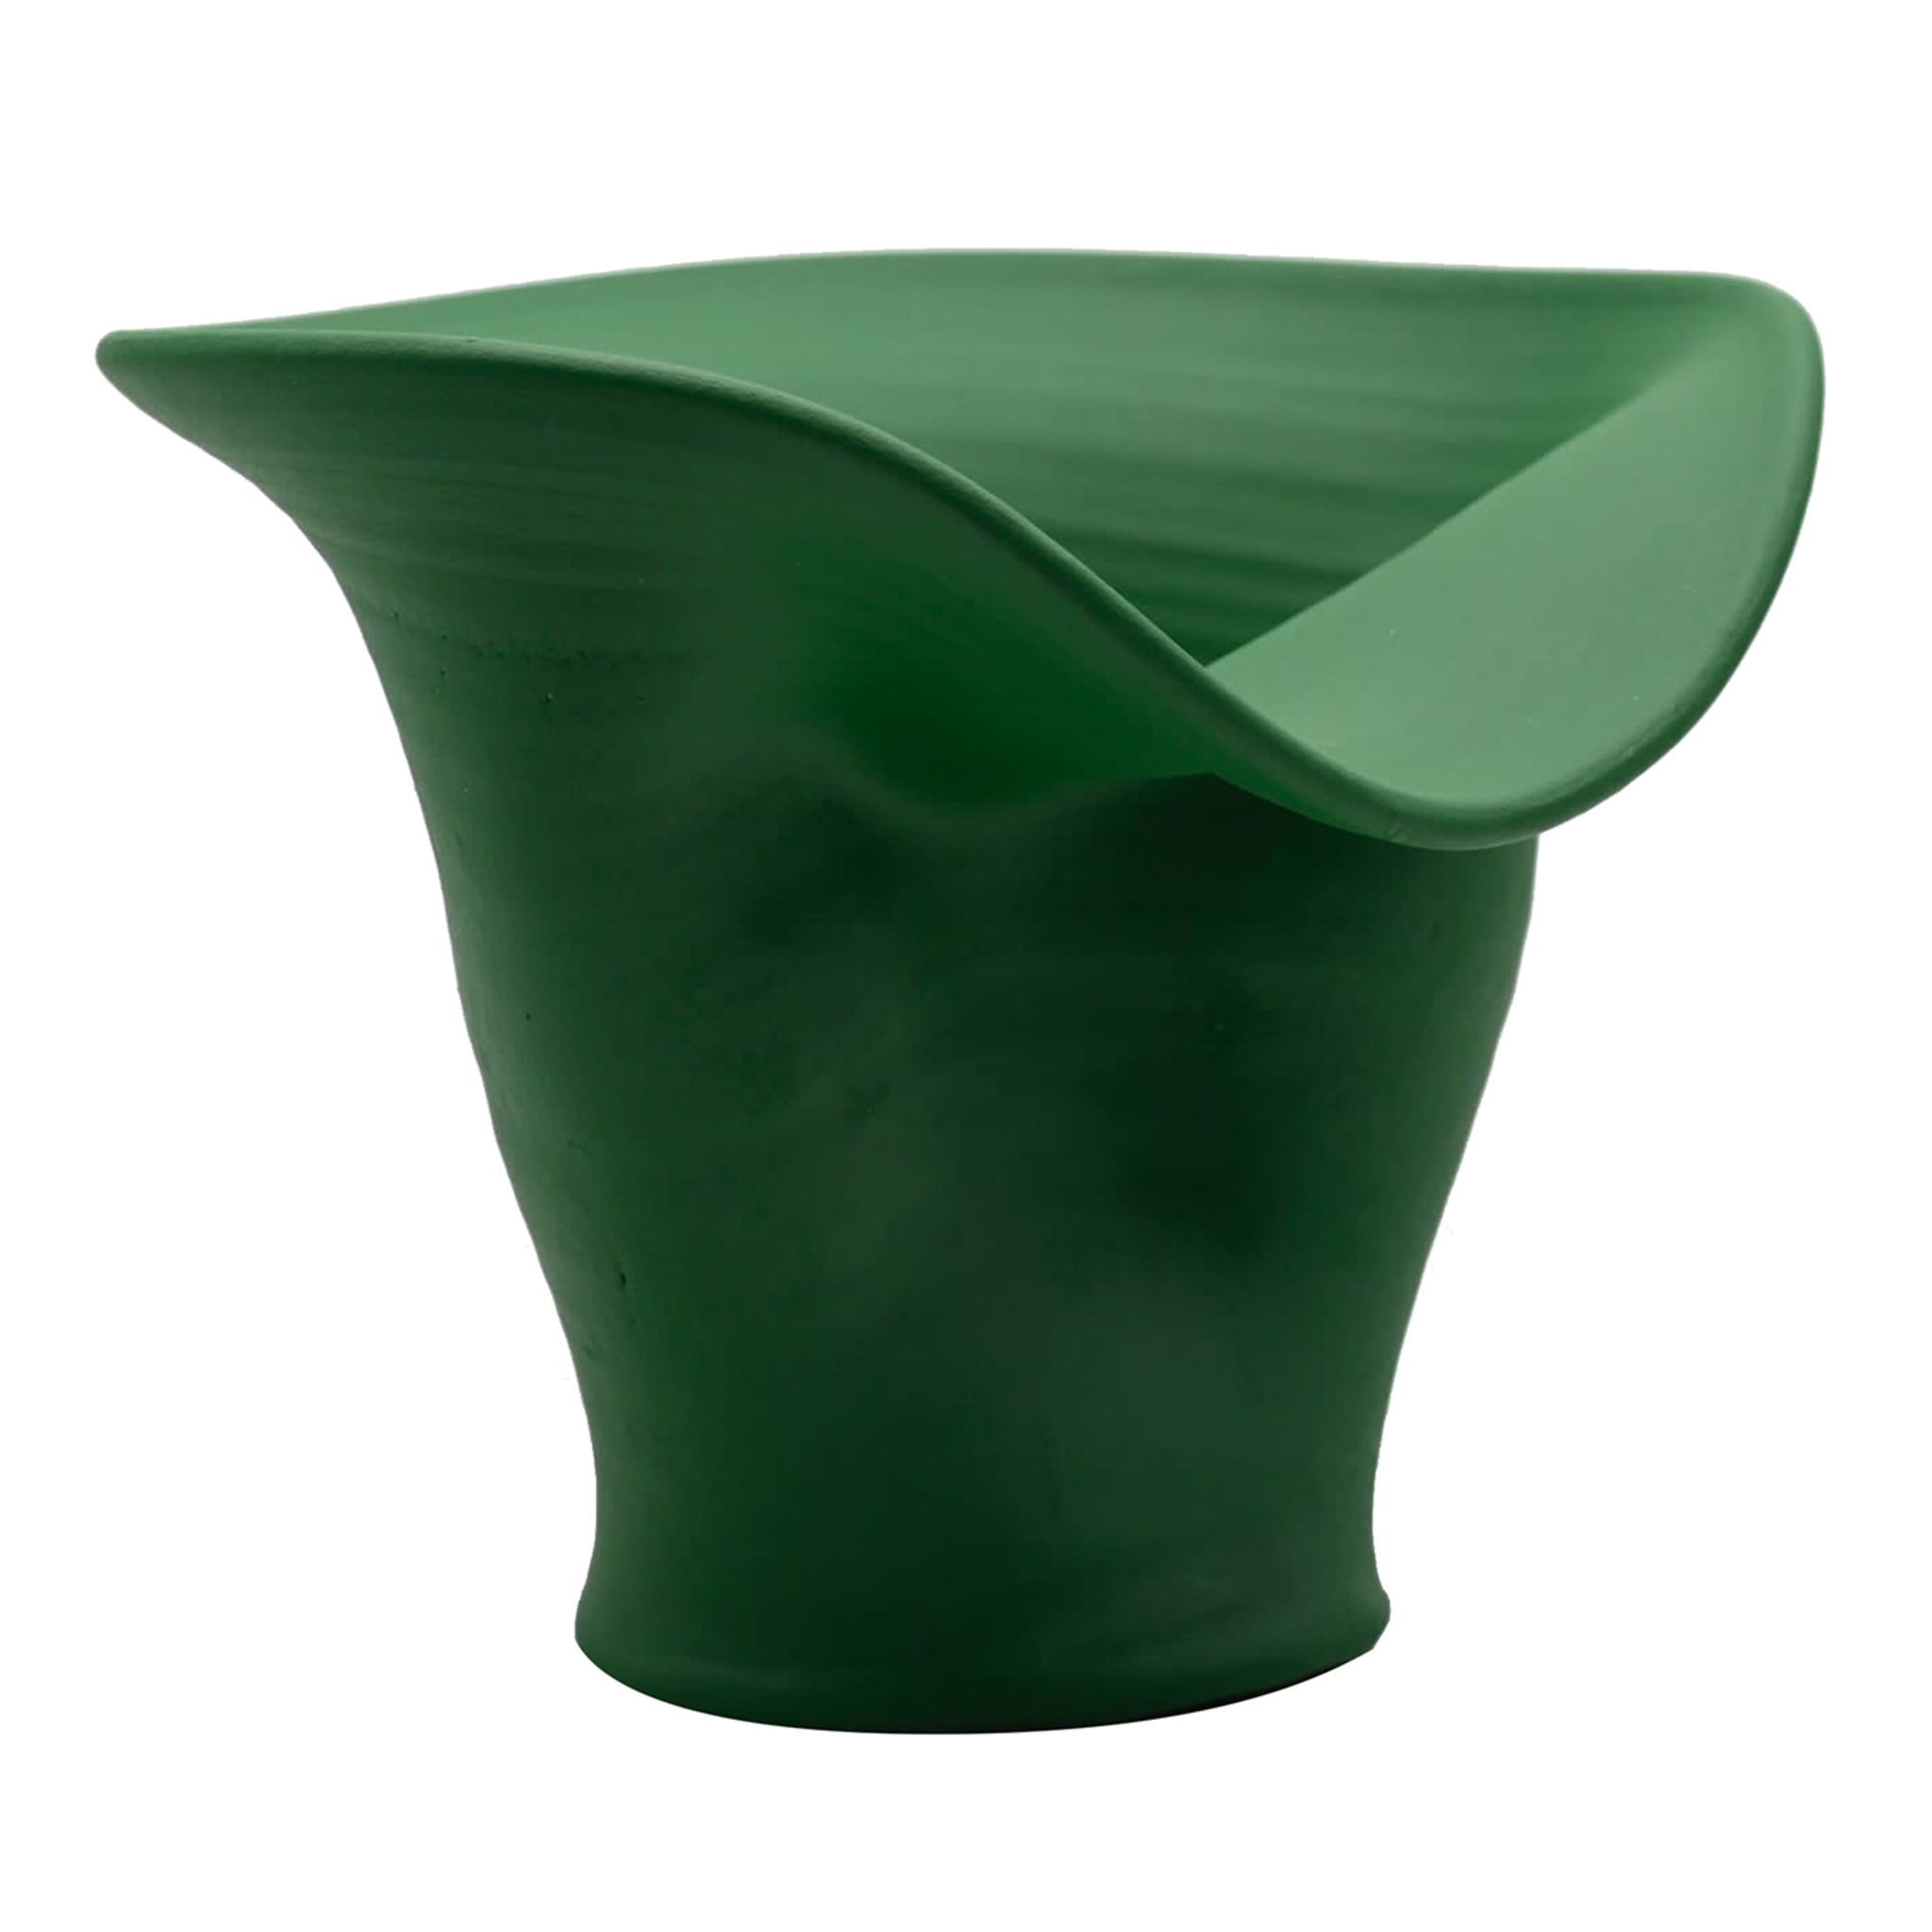 Green Vase #4 - Main view